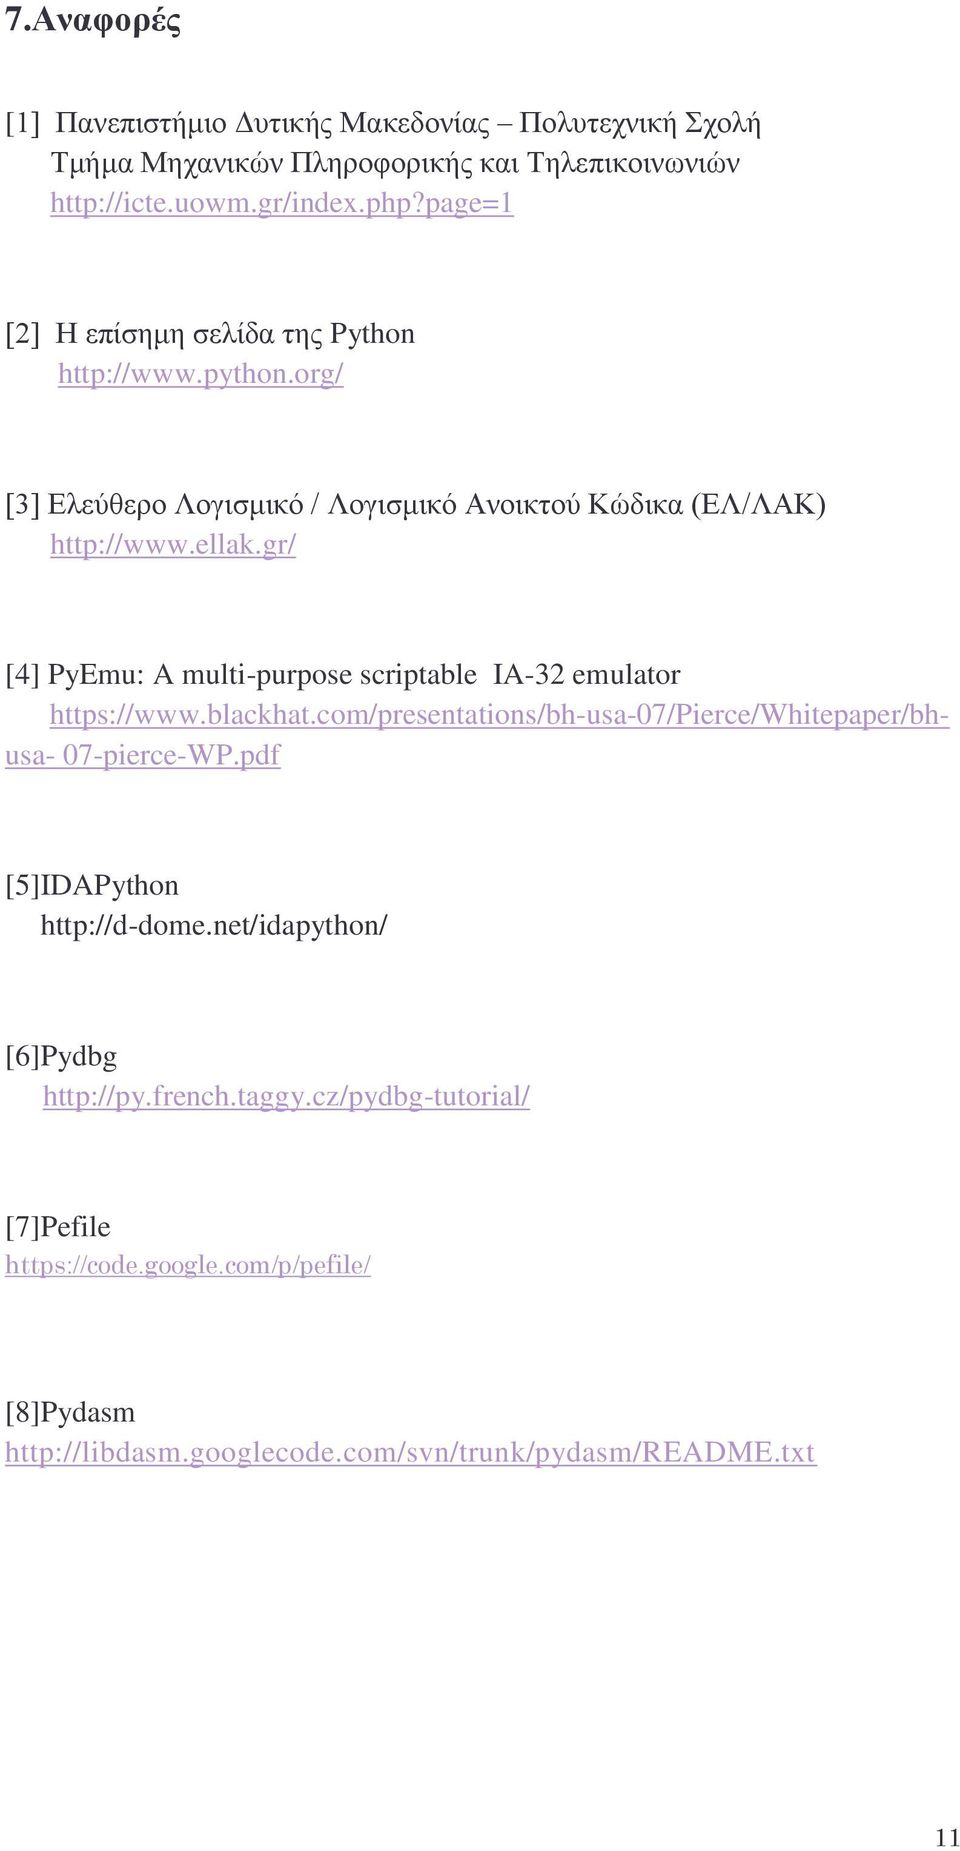 gr/ [4] PyEmu: A multi-purpose scriptable IA-32 emulator https://www.blackhat.com/presentations/bh-usa-07/pierce/whitepaper/bhusa- 07-pierce-WP.